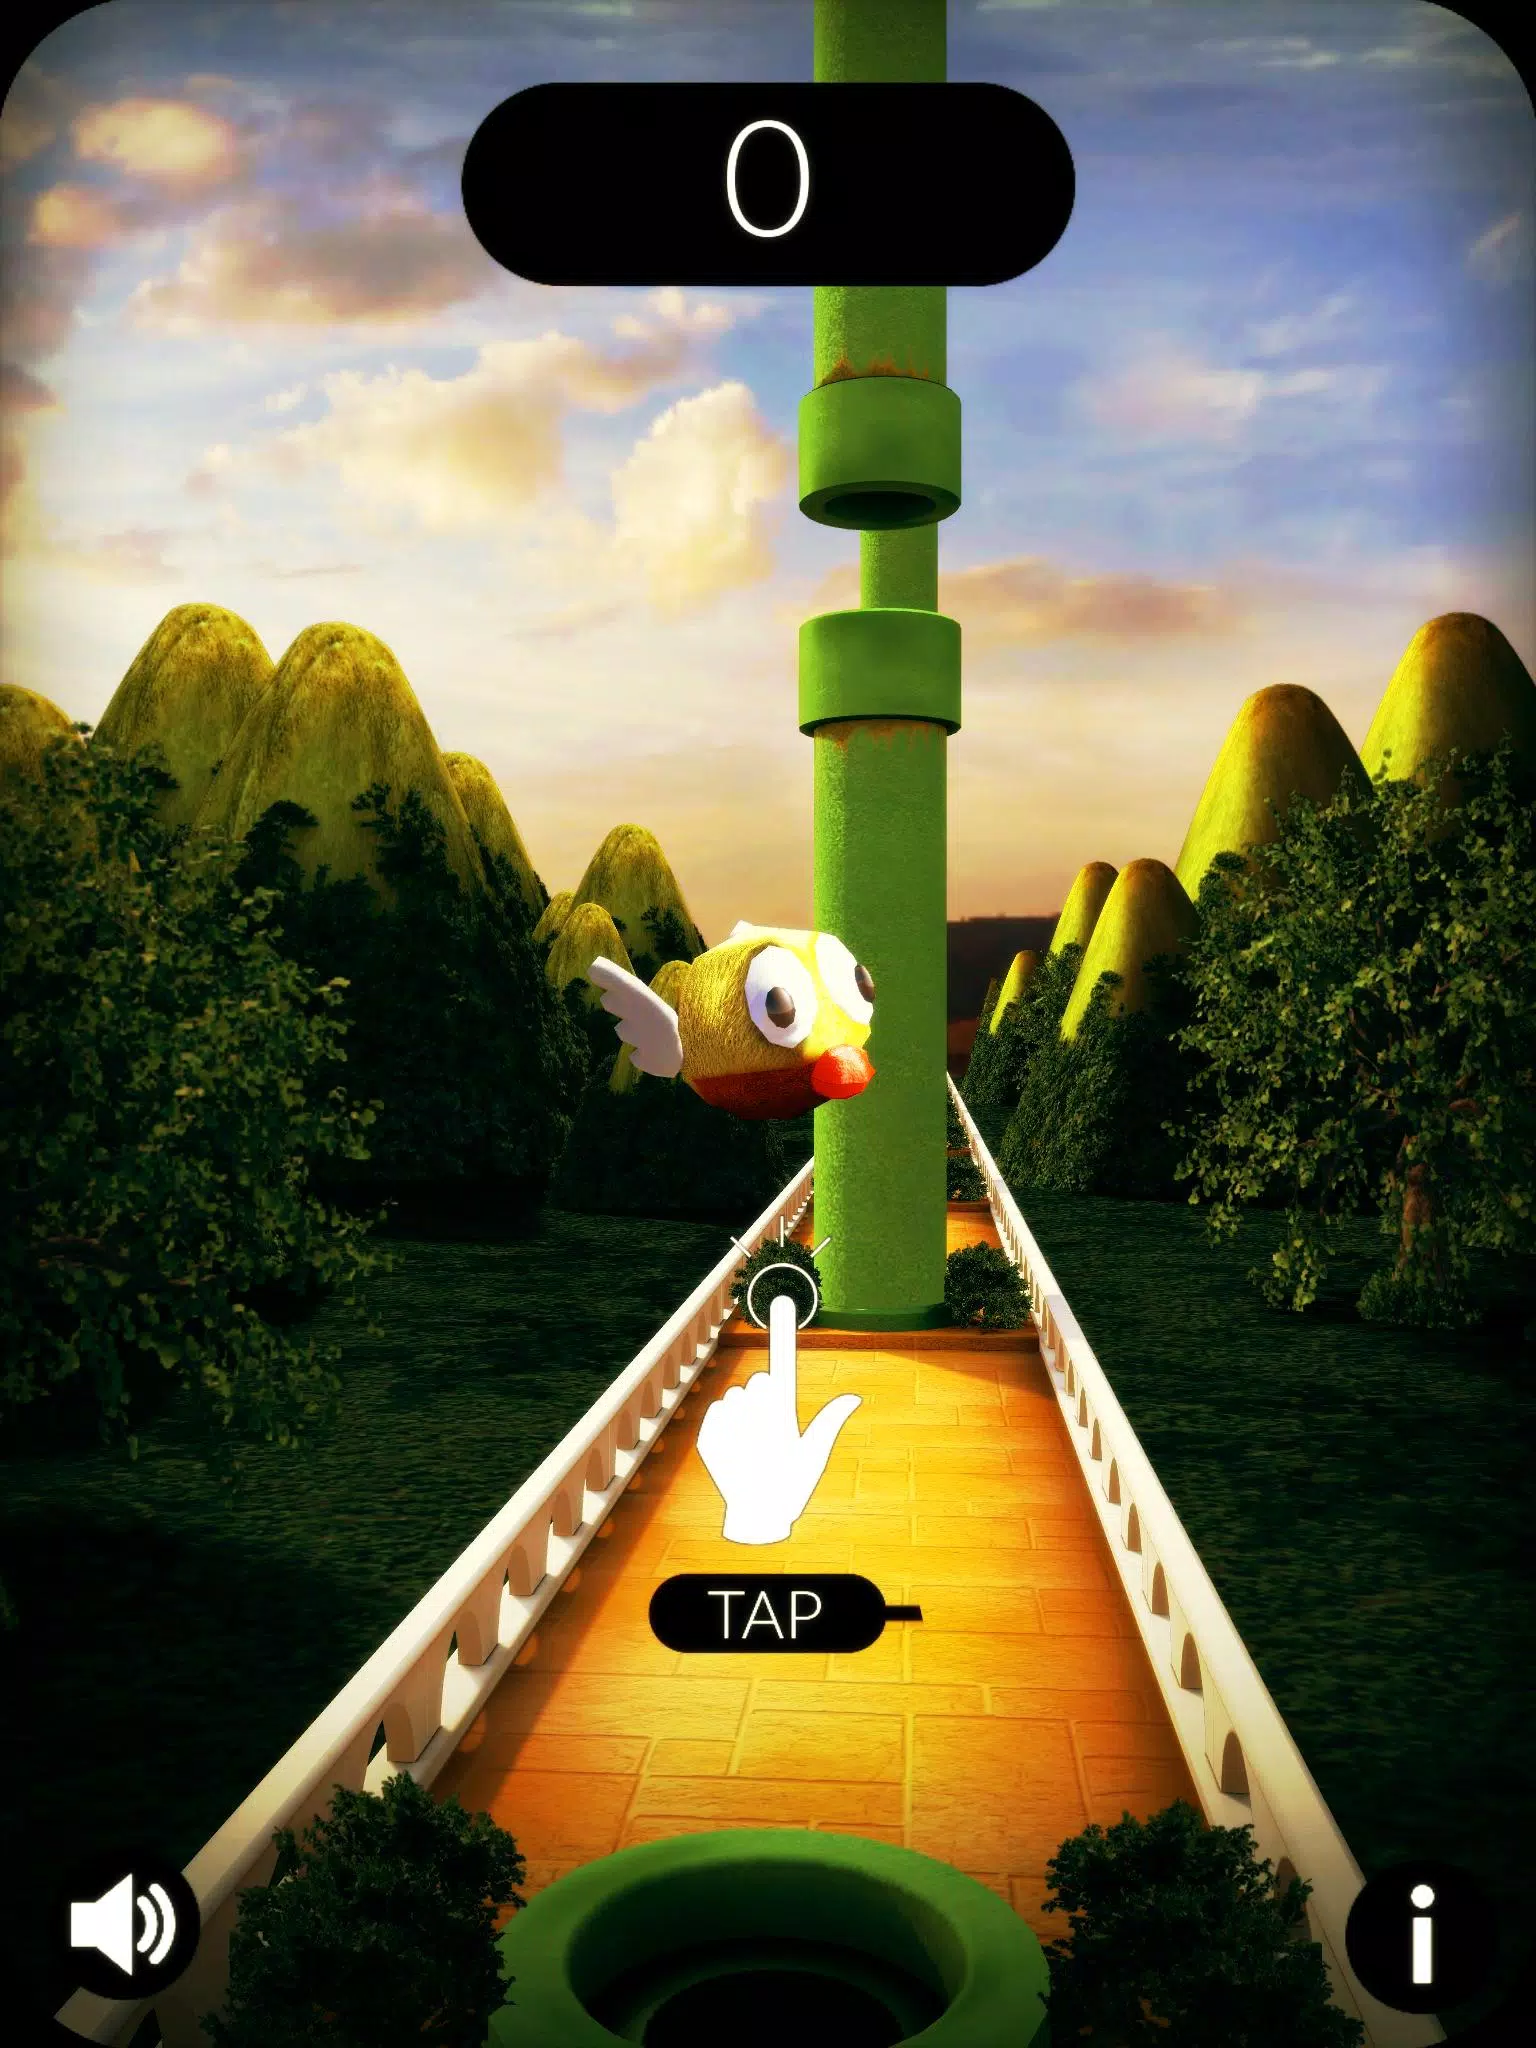 Flappy 3D - Bird's Eye Epic flappy bird APK + Mod for Android.